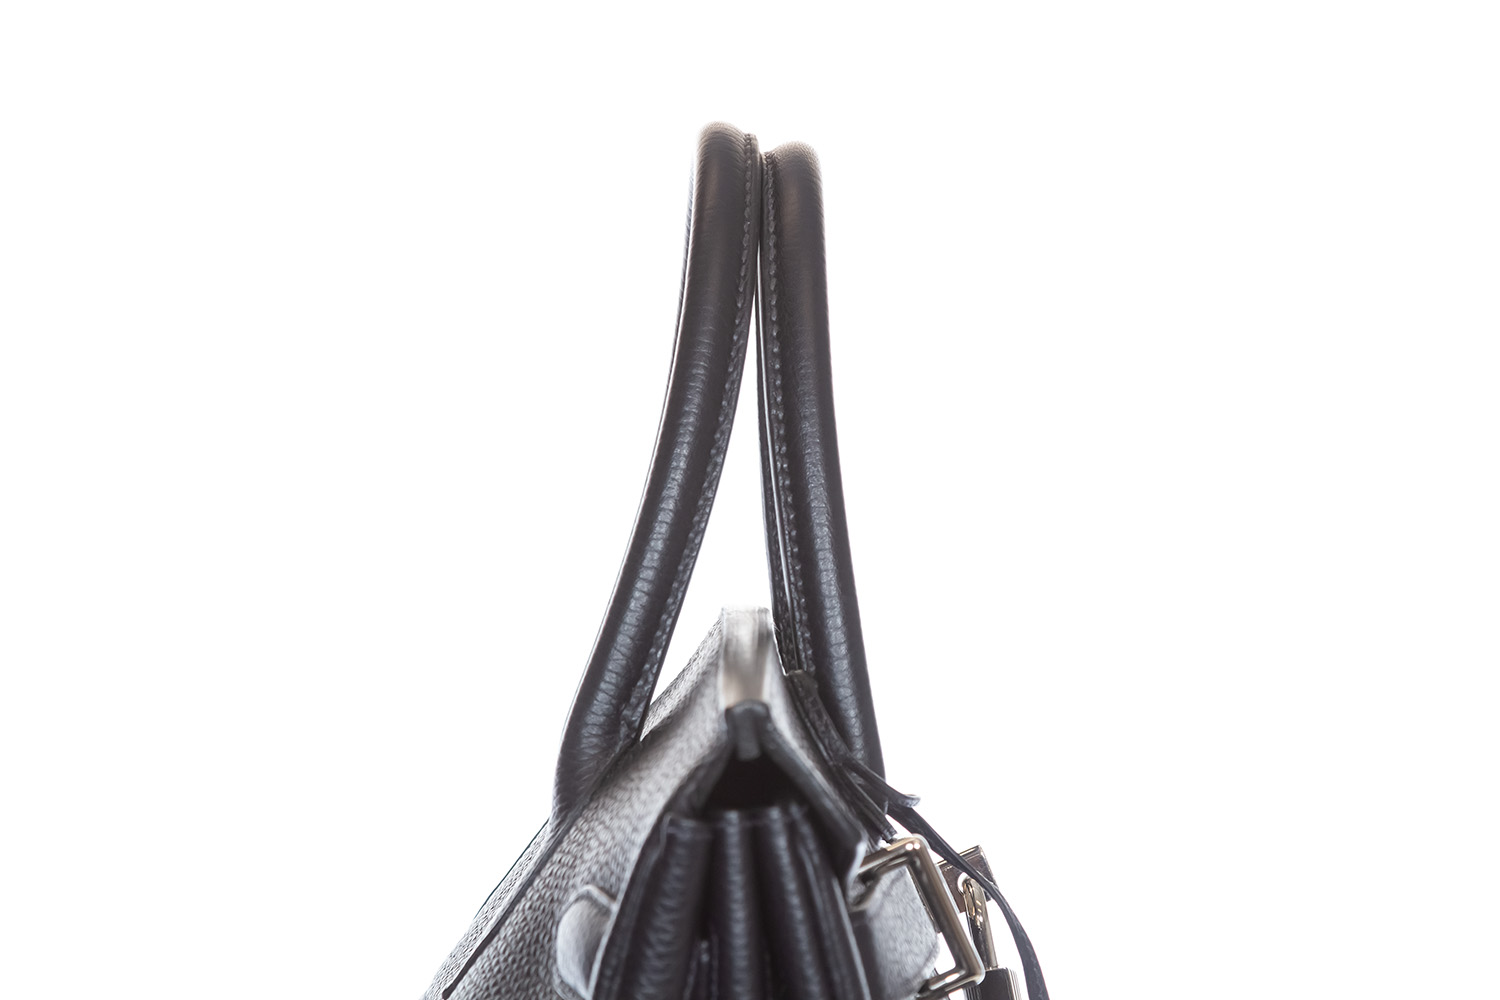 Hermès Birkin Handbag 395268, HealthdesignShops